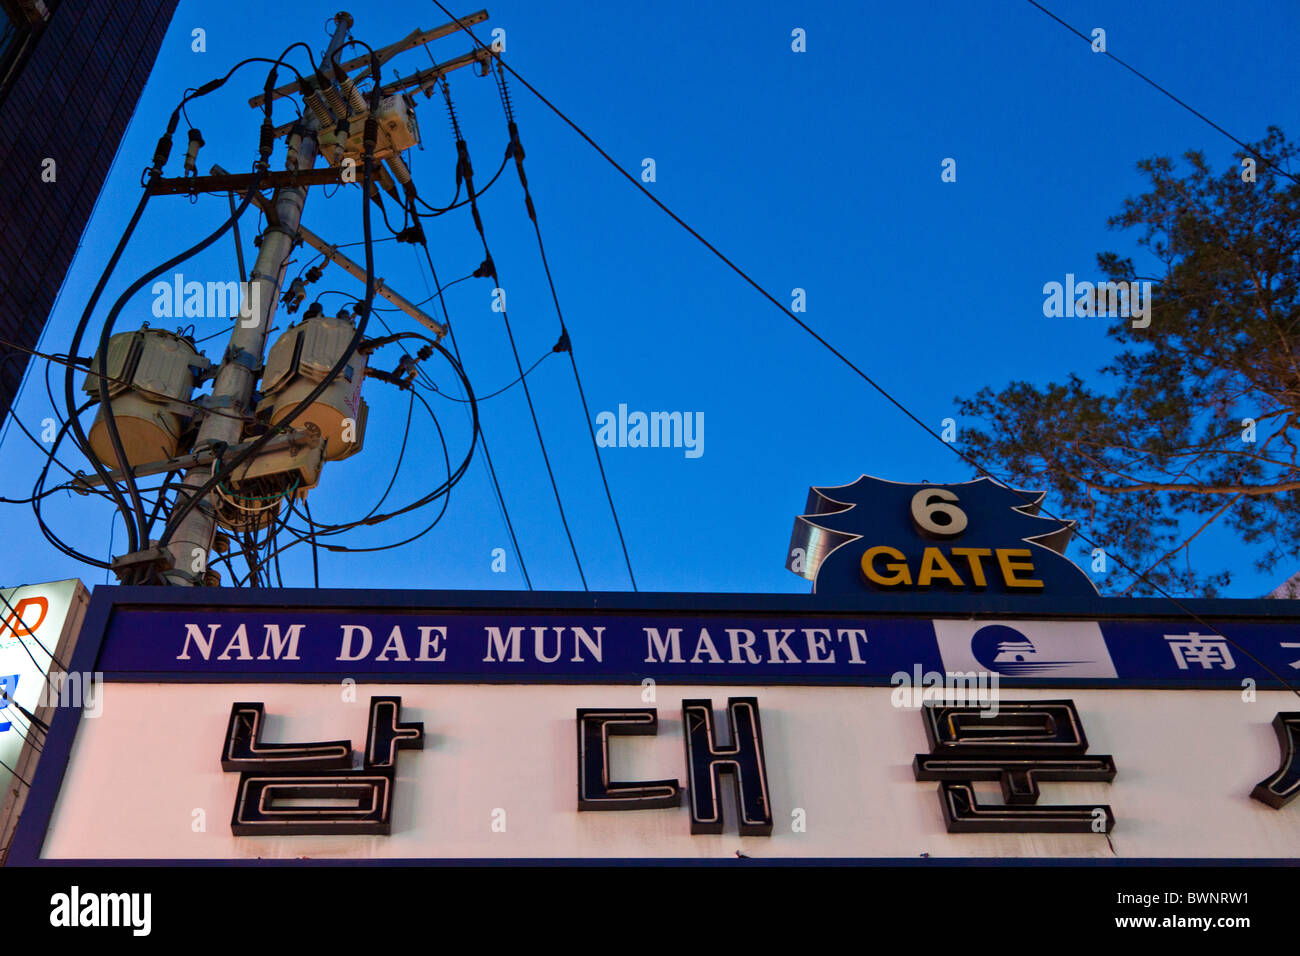 Electrical sub-station on pole at Namdaemun market Gate 6 in Seoul South Korea at dusk. JMH3850 Stock Photo